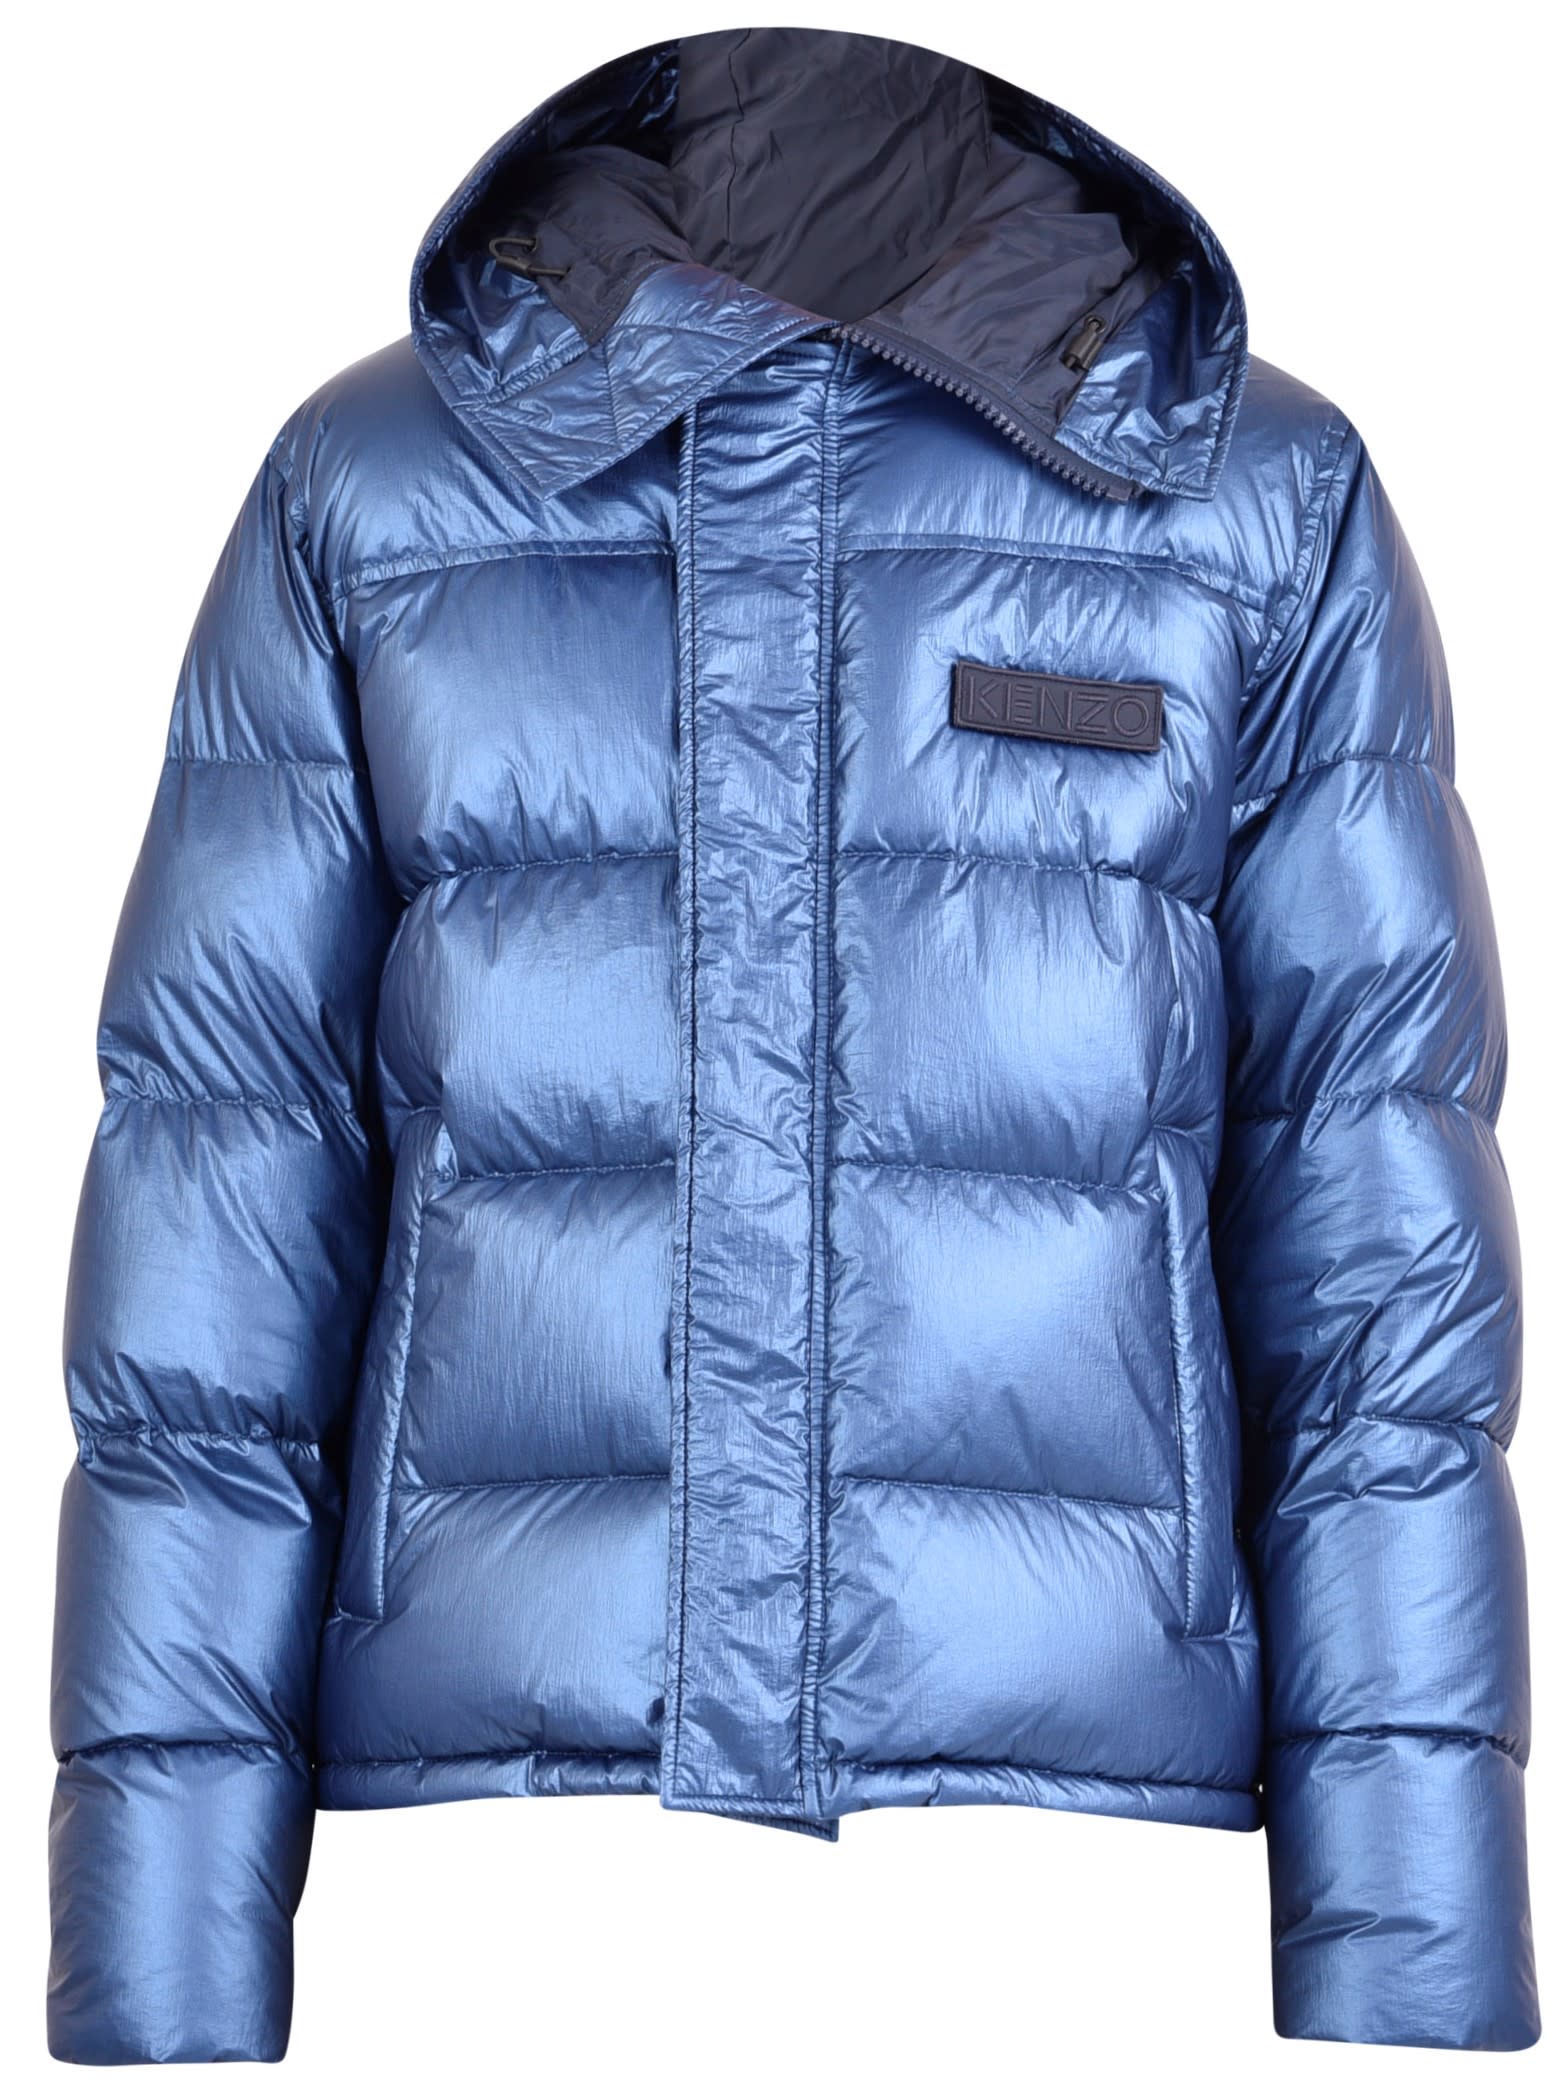 blue kenzo jacket Cheaper Than Retail 